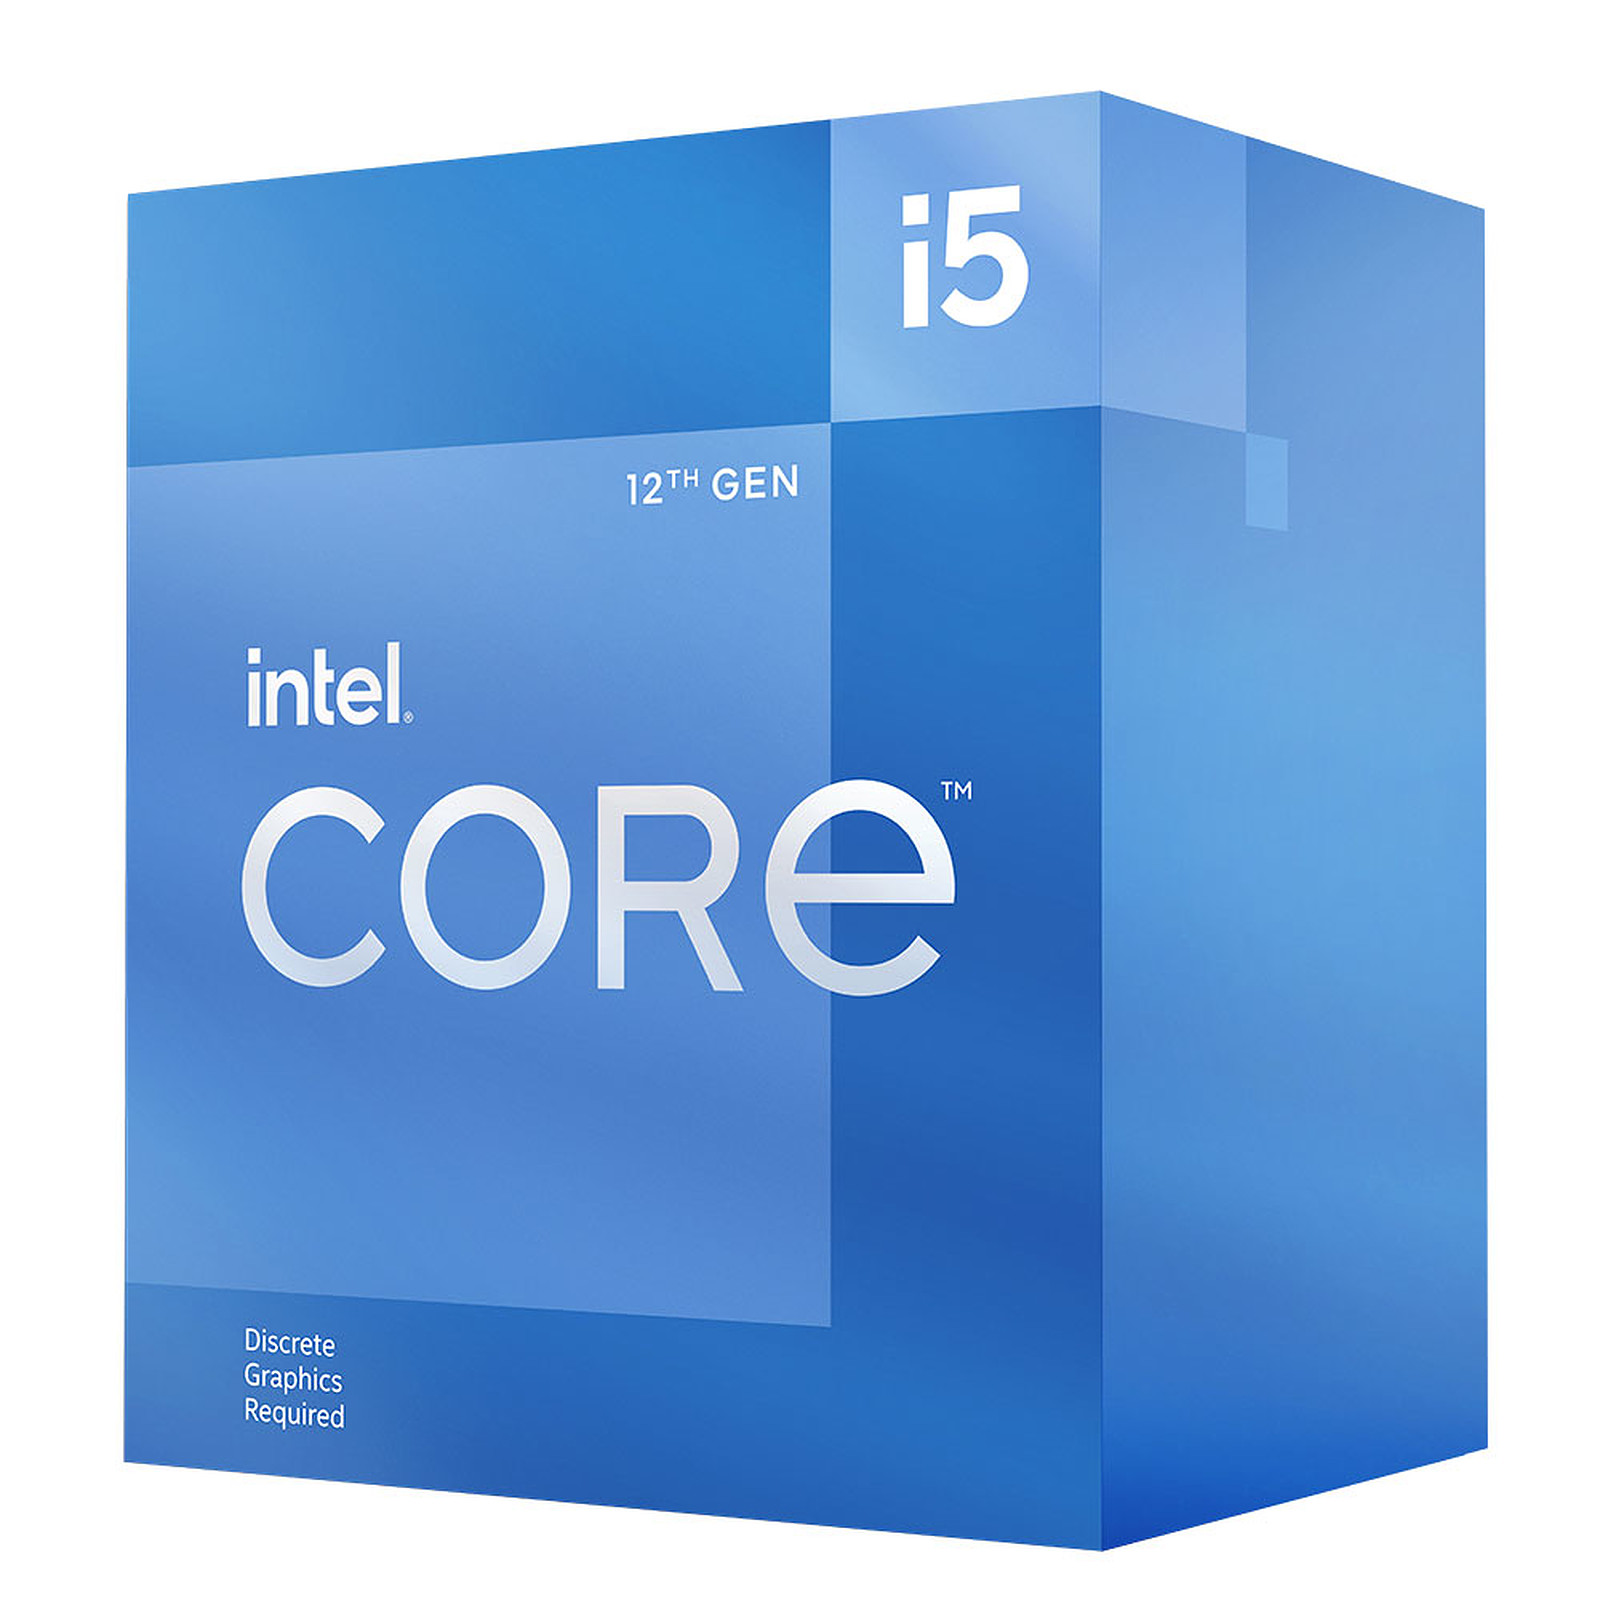 Intel® Core™ i5-10400F Processor – Compumark